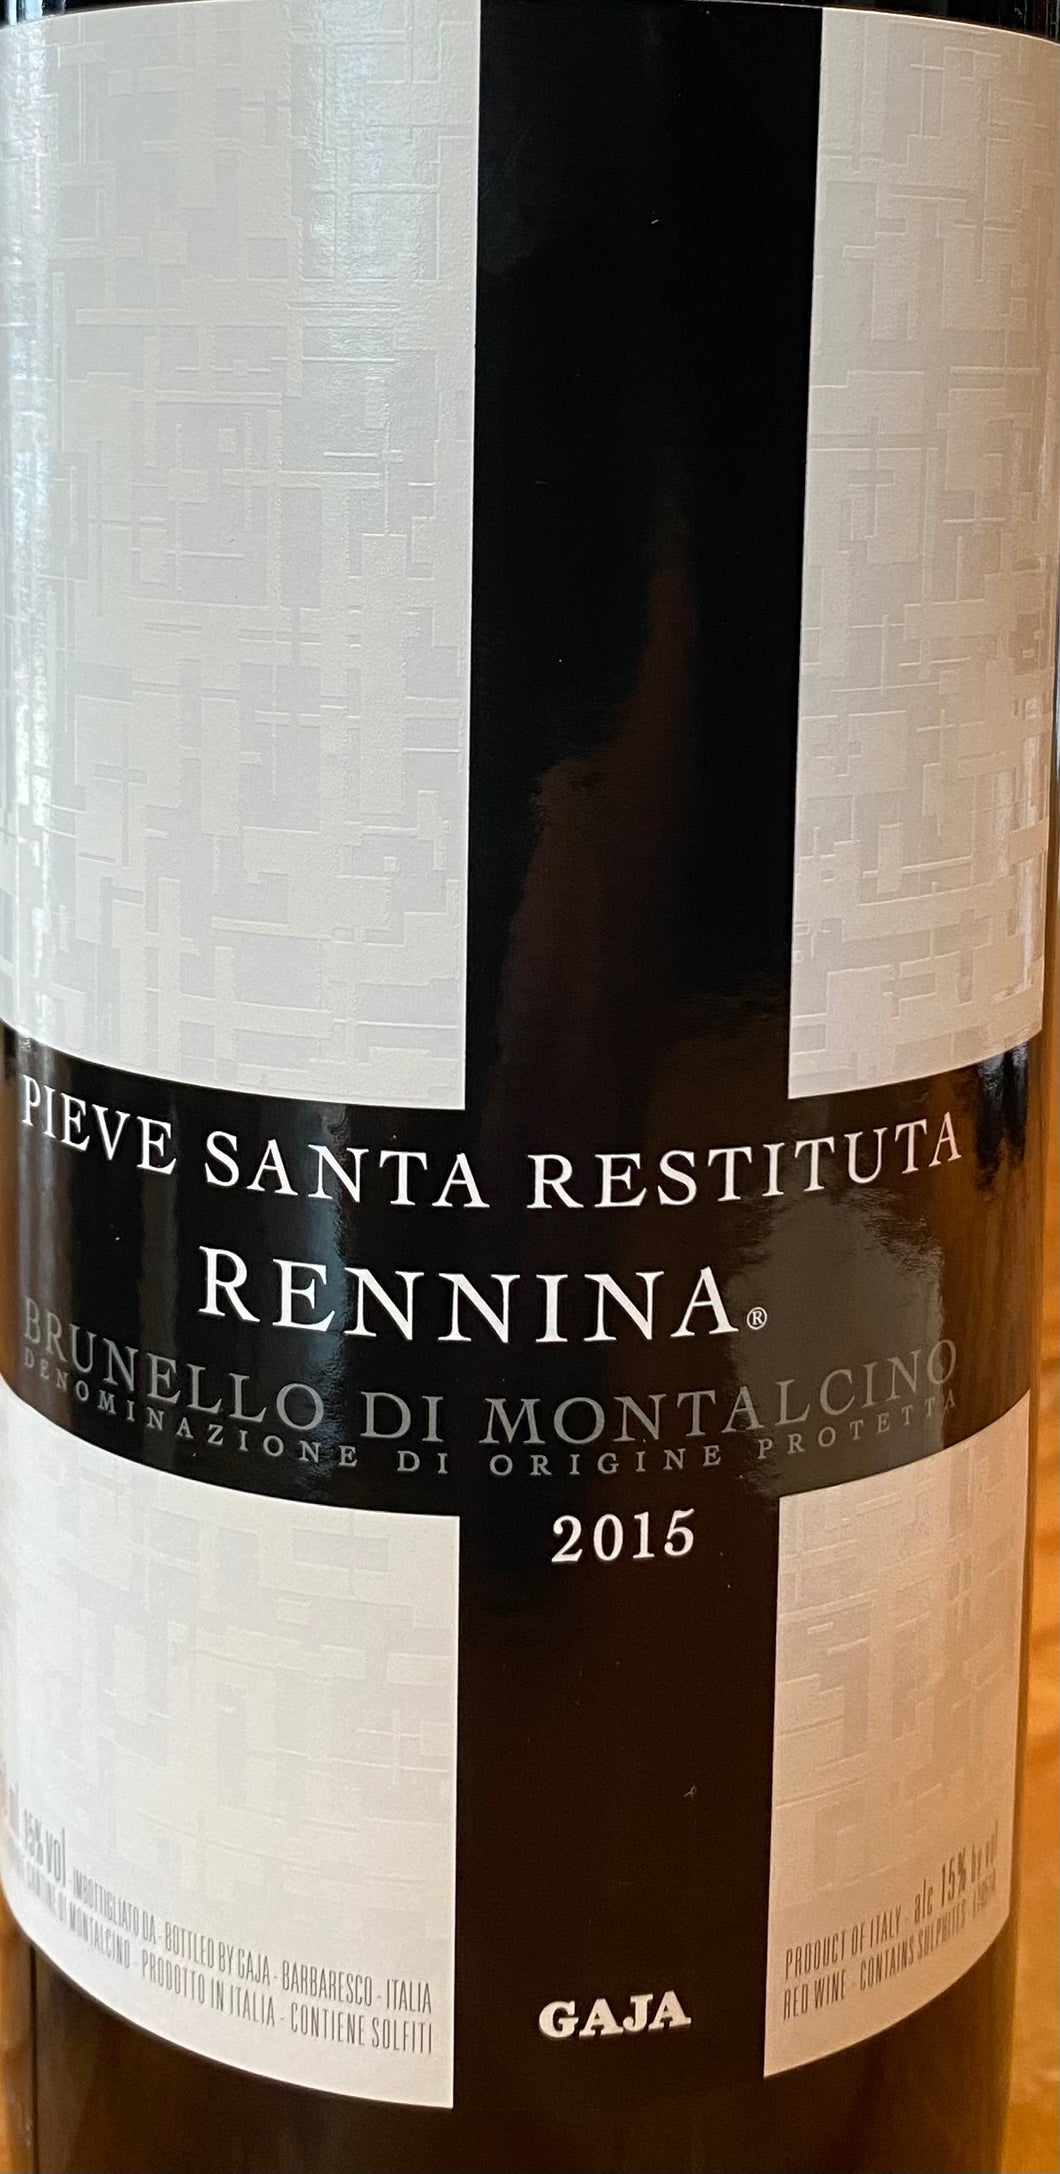 Gaja Rennina PieveSanta Restituta Brunelle Di Montalcino DOCG 2015 - 0,75 Ltr.